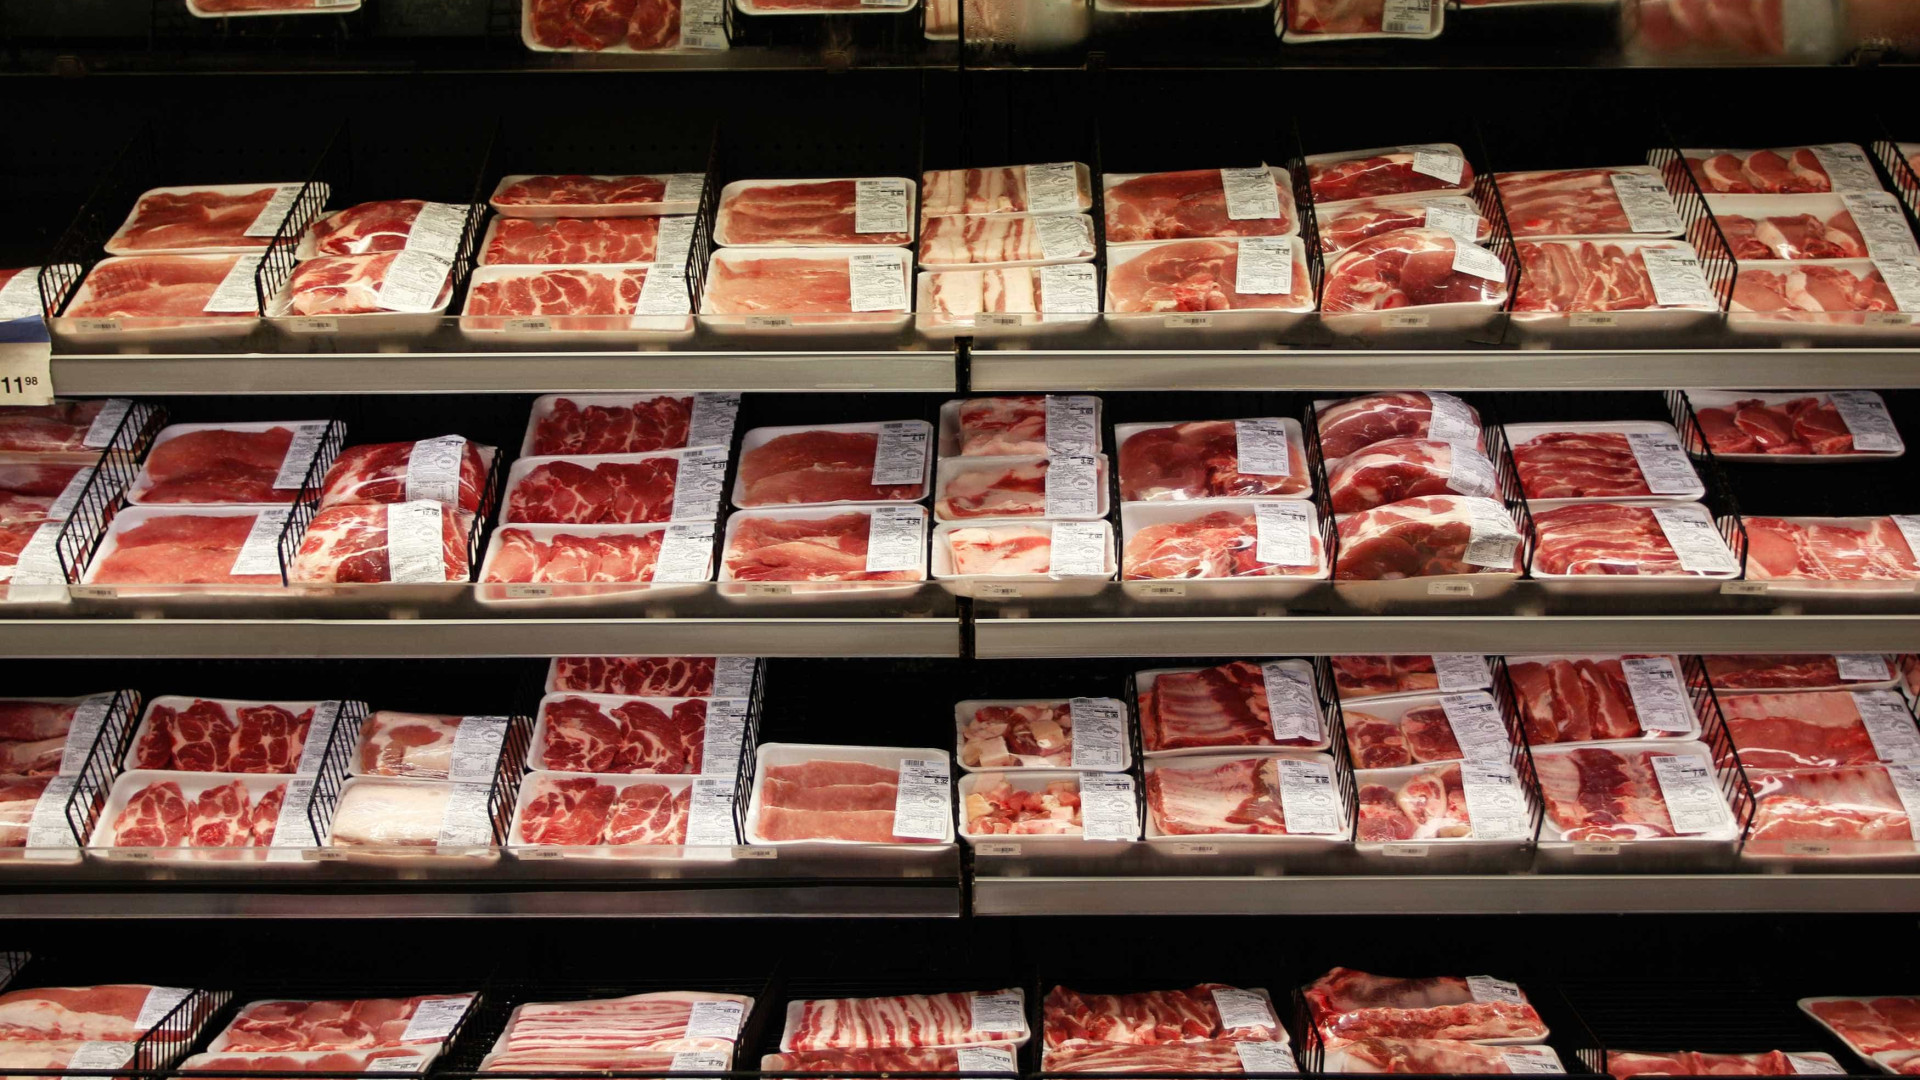 Procon descarta 218 kg de carne com prazo de validade vencido